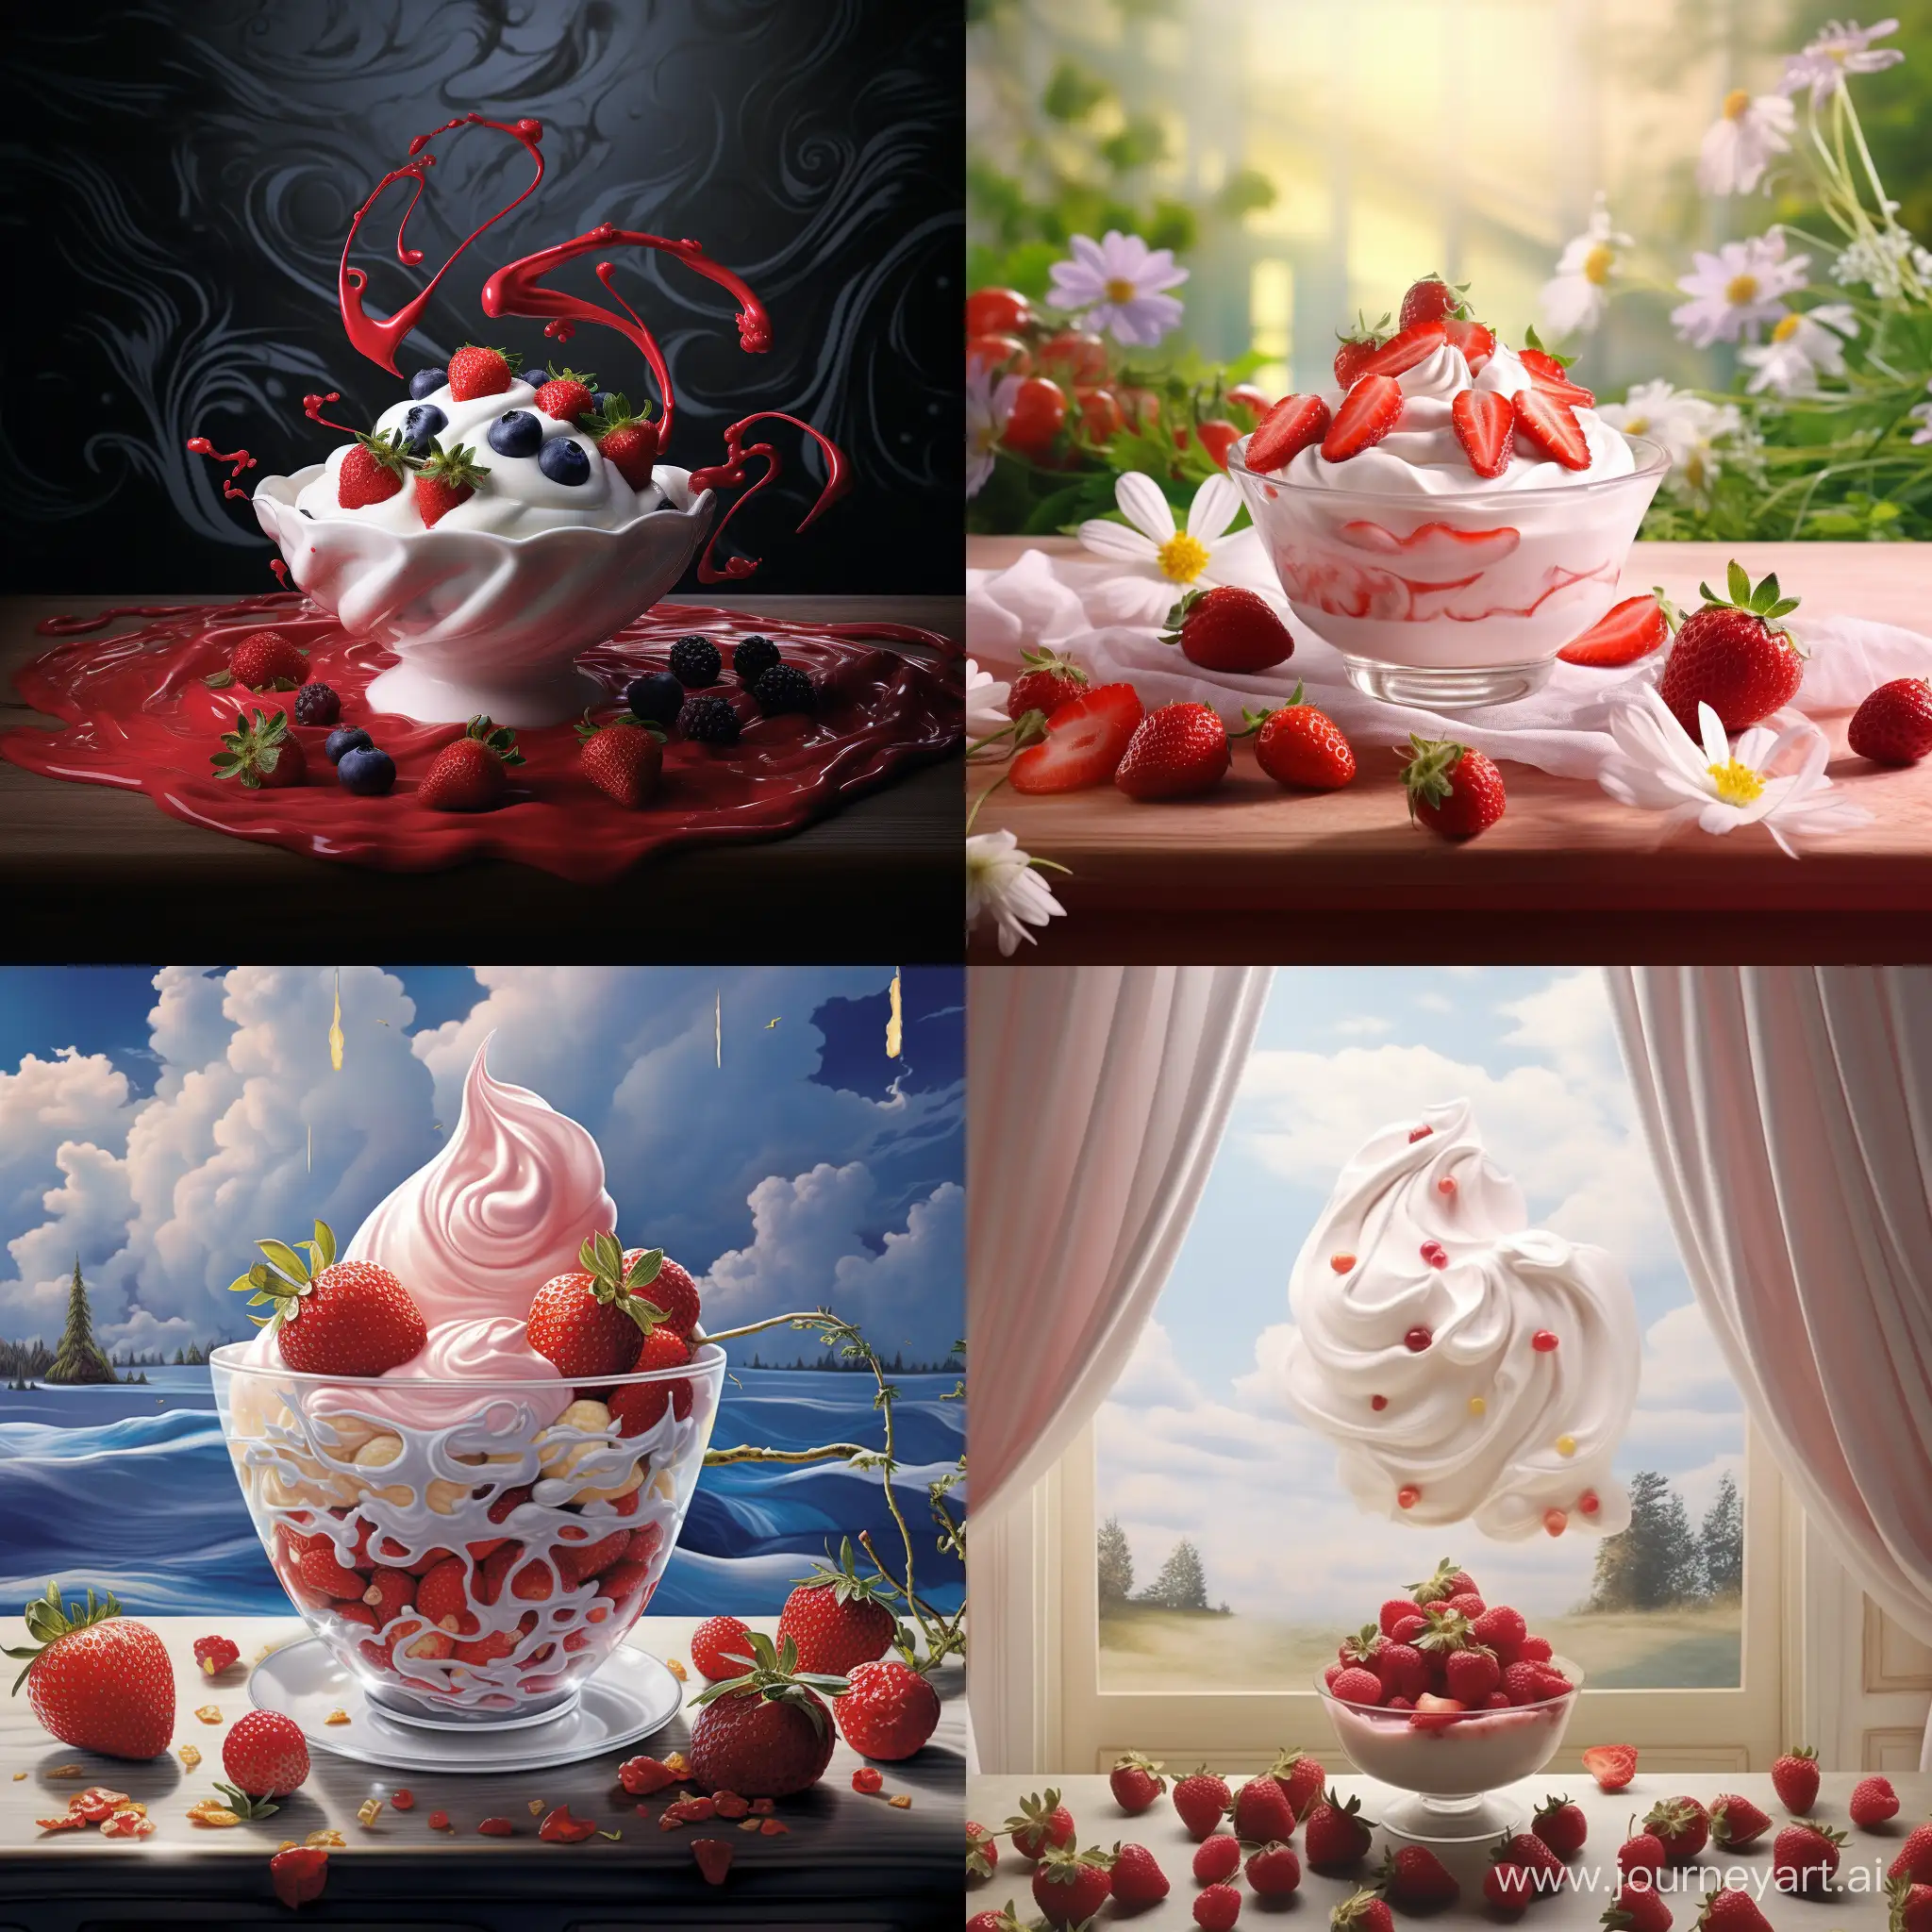 Delicious-Yogurt-with-Fresh-Strawberries-Advertisement